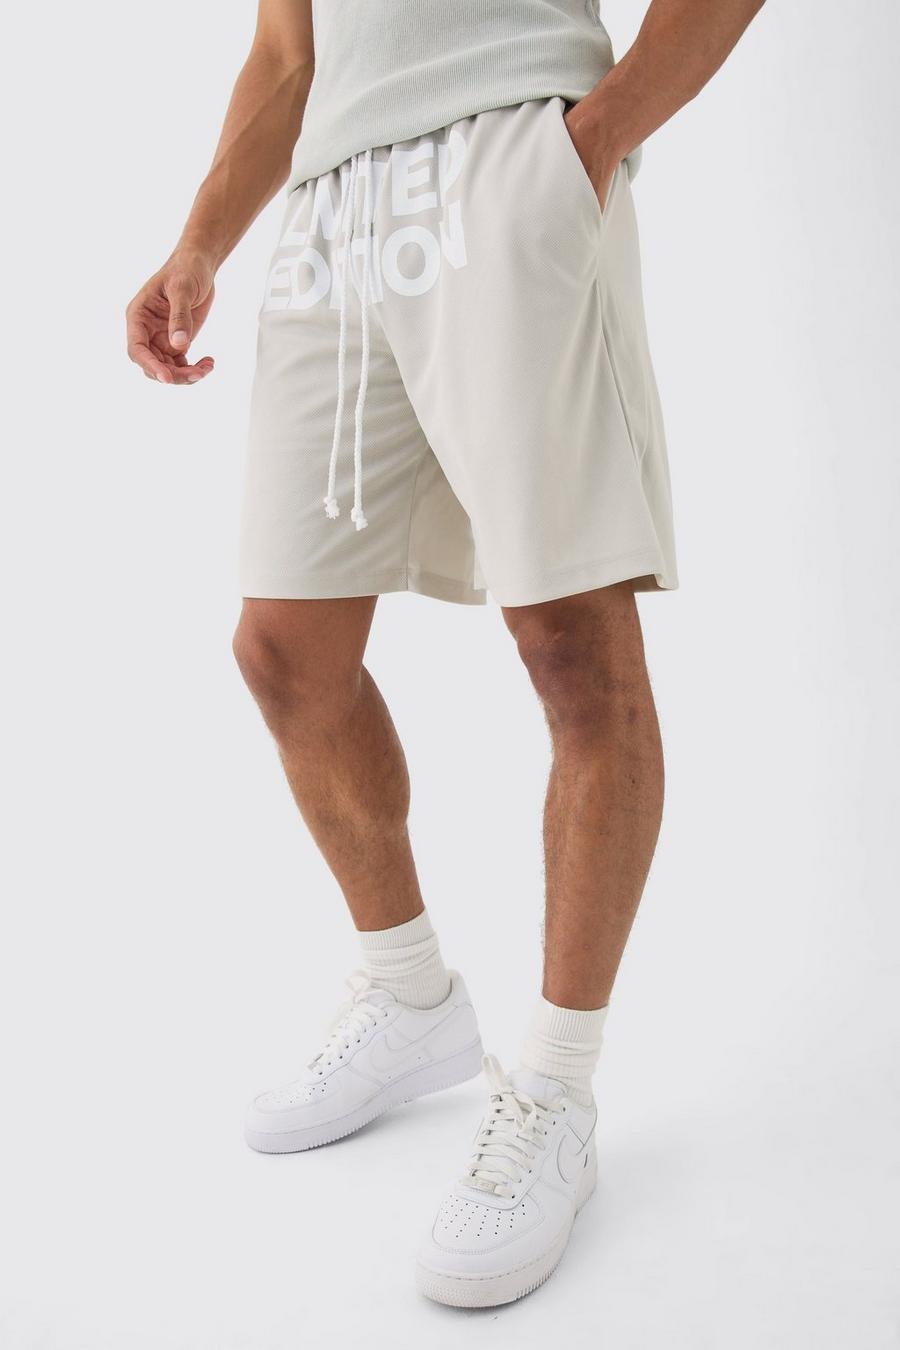 Lockere mittellange Limited Edition Mesh-Shorts, Grey